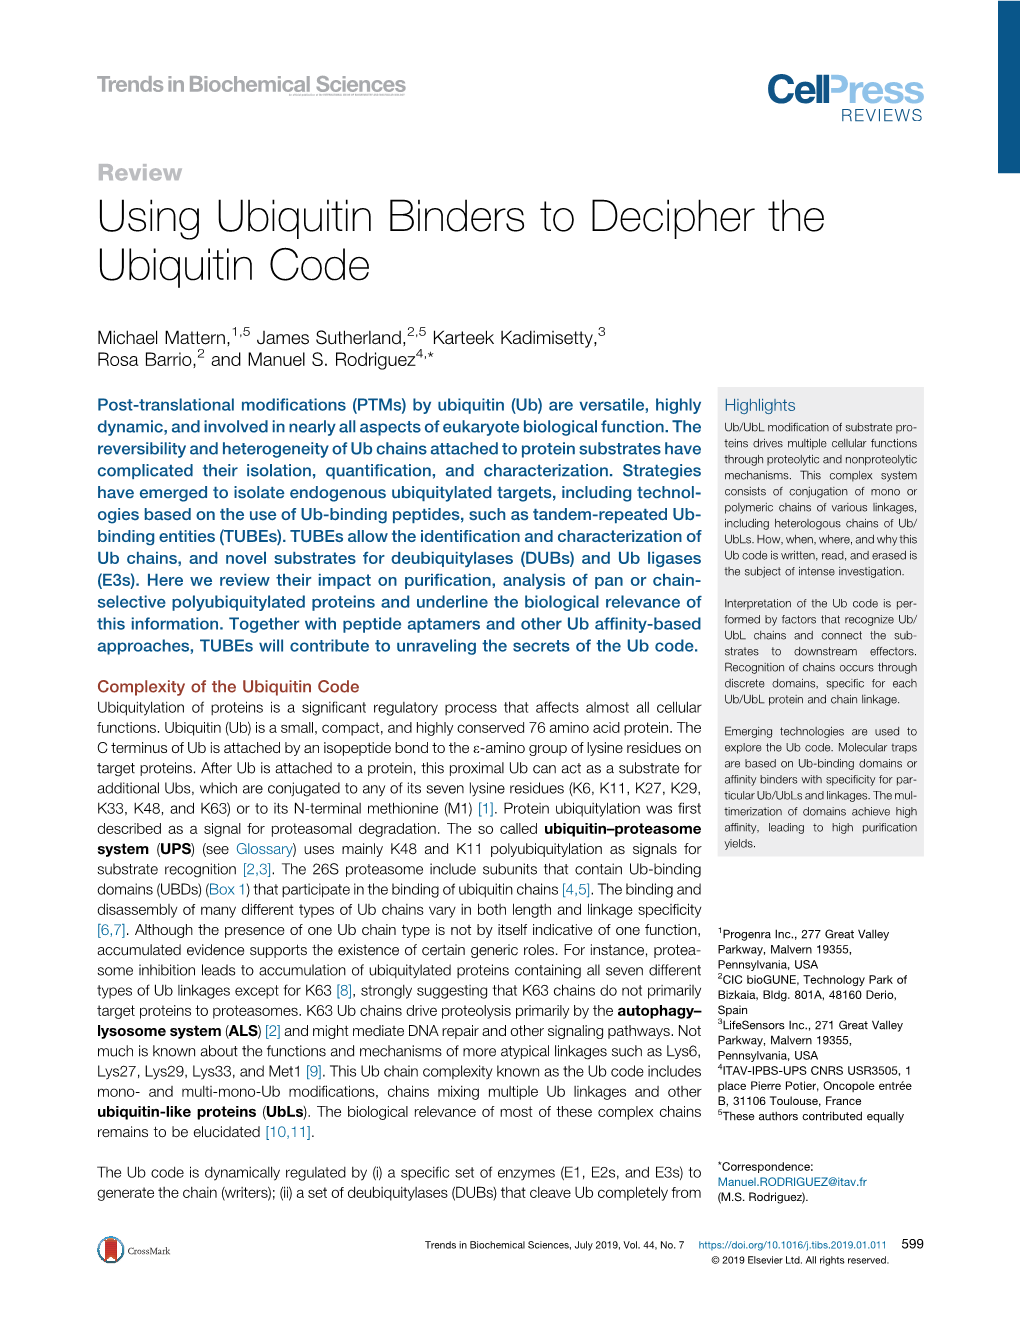 Using Ubiquitin Binders to Decipher the Ubiquitin Code